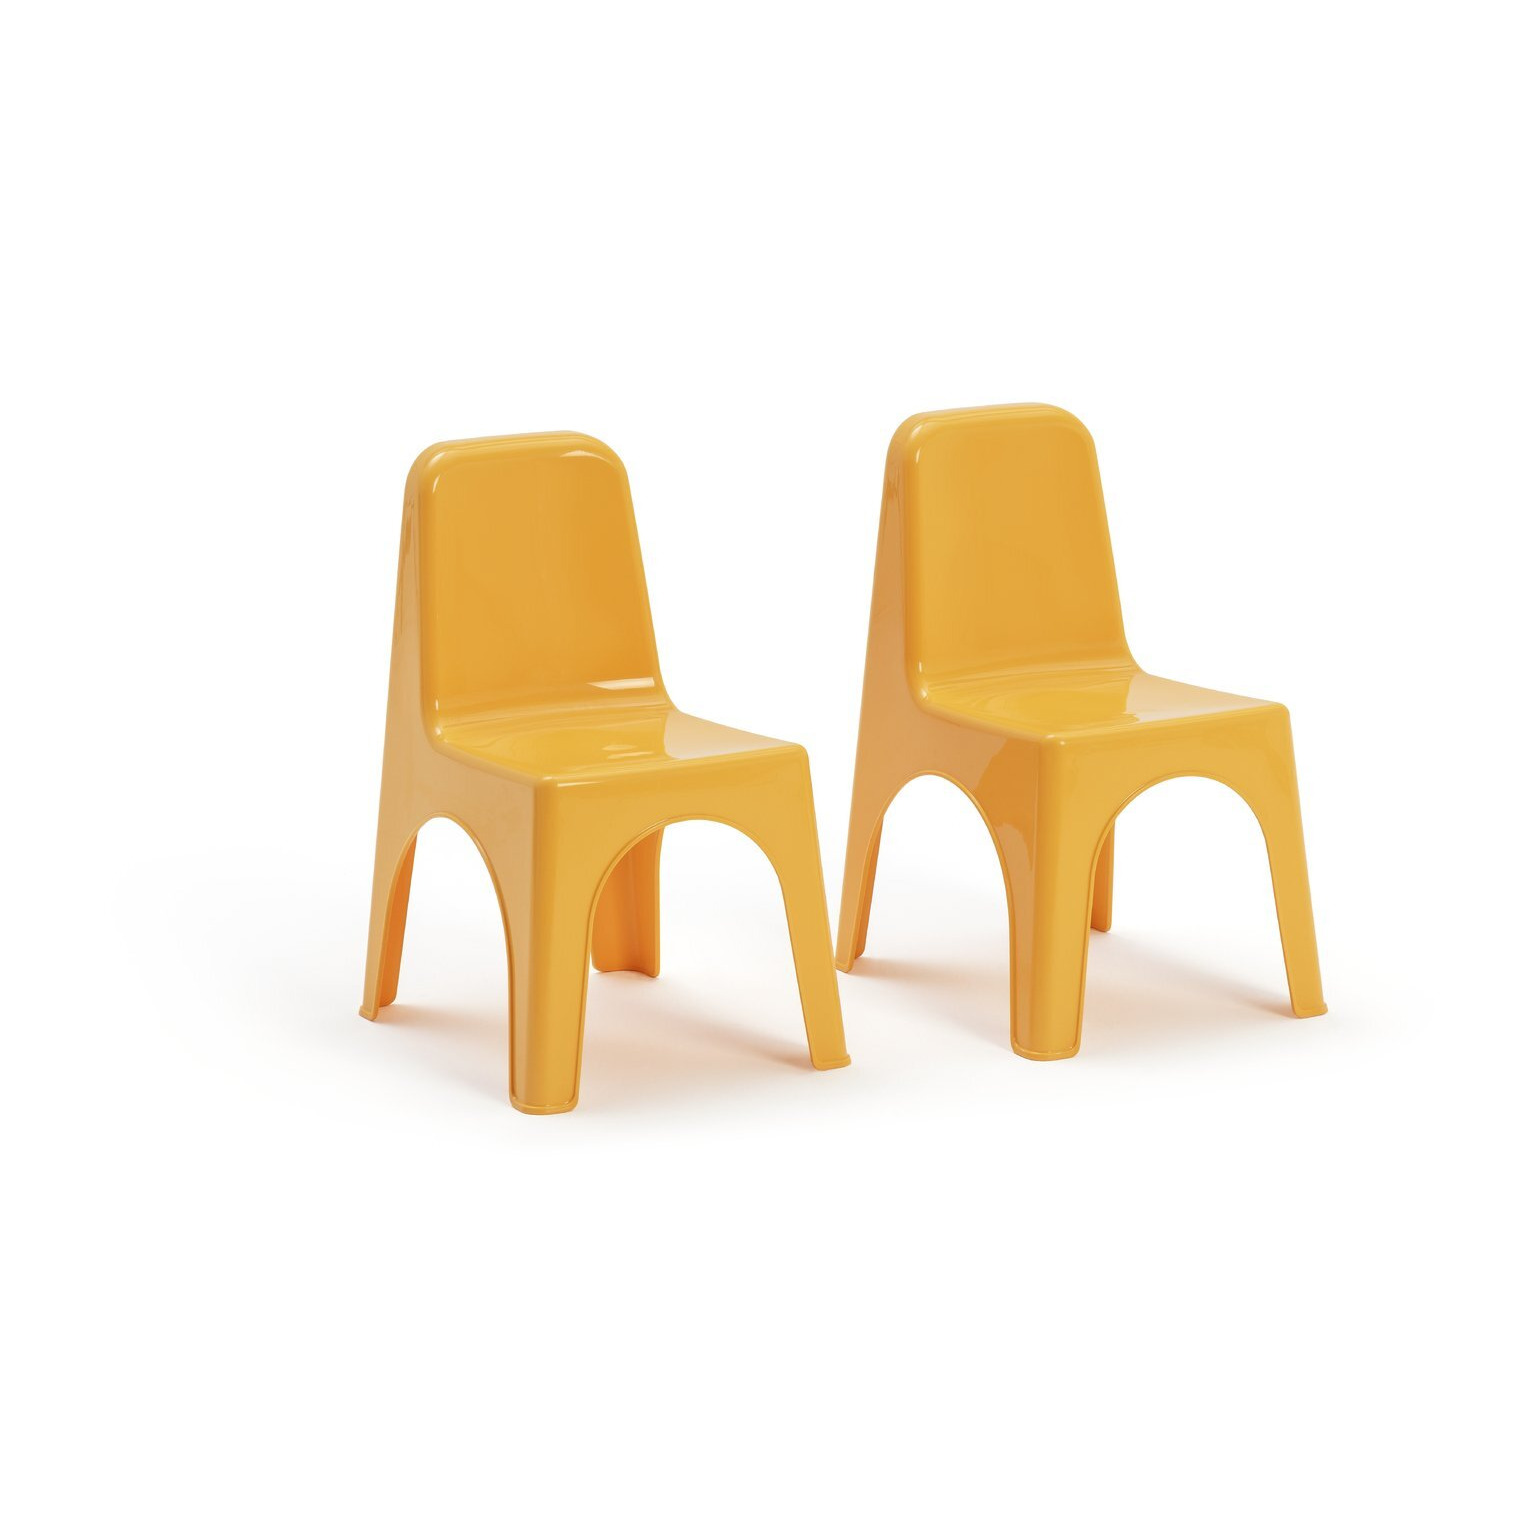 Bica Kids Set of 2 Yellow Plastic Chairs - image 1